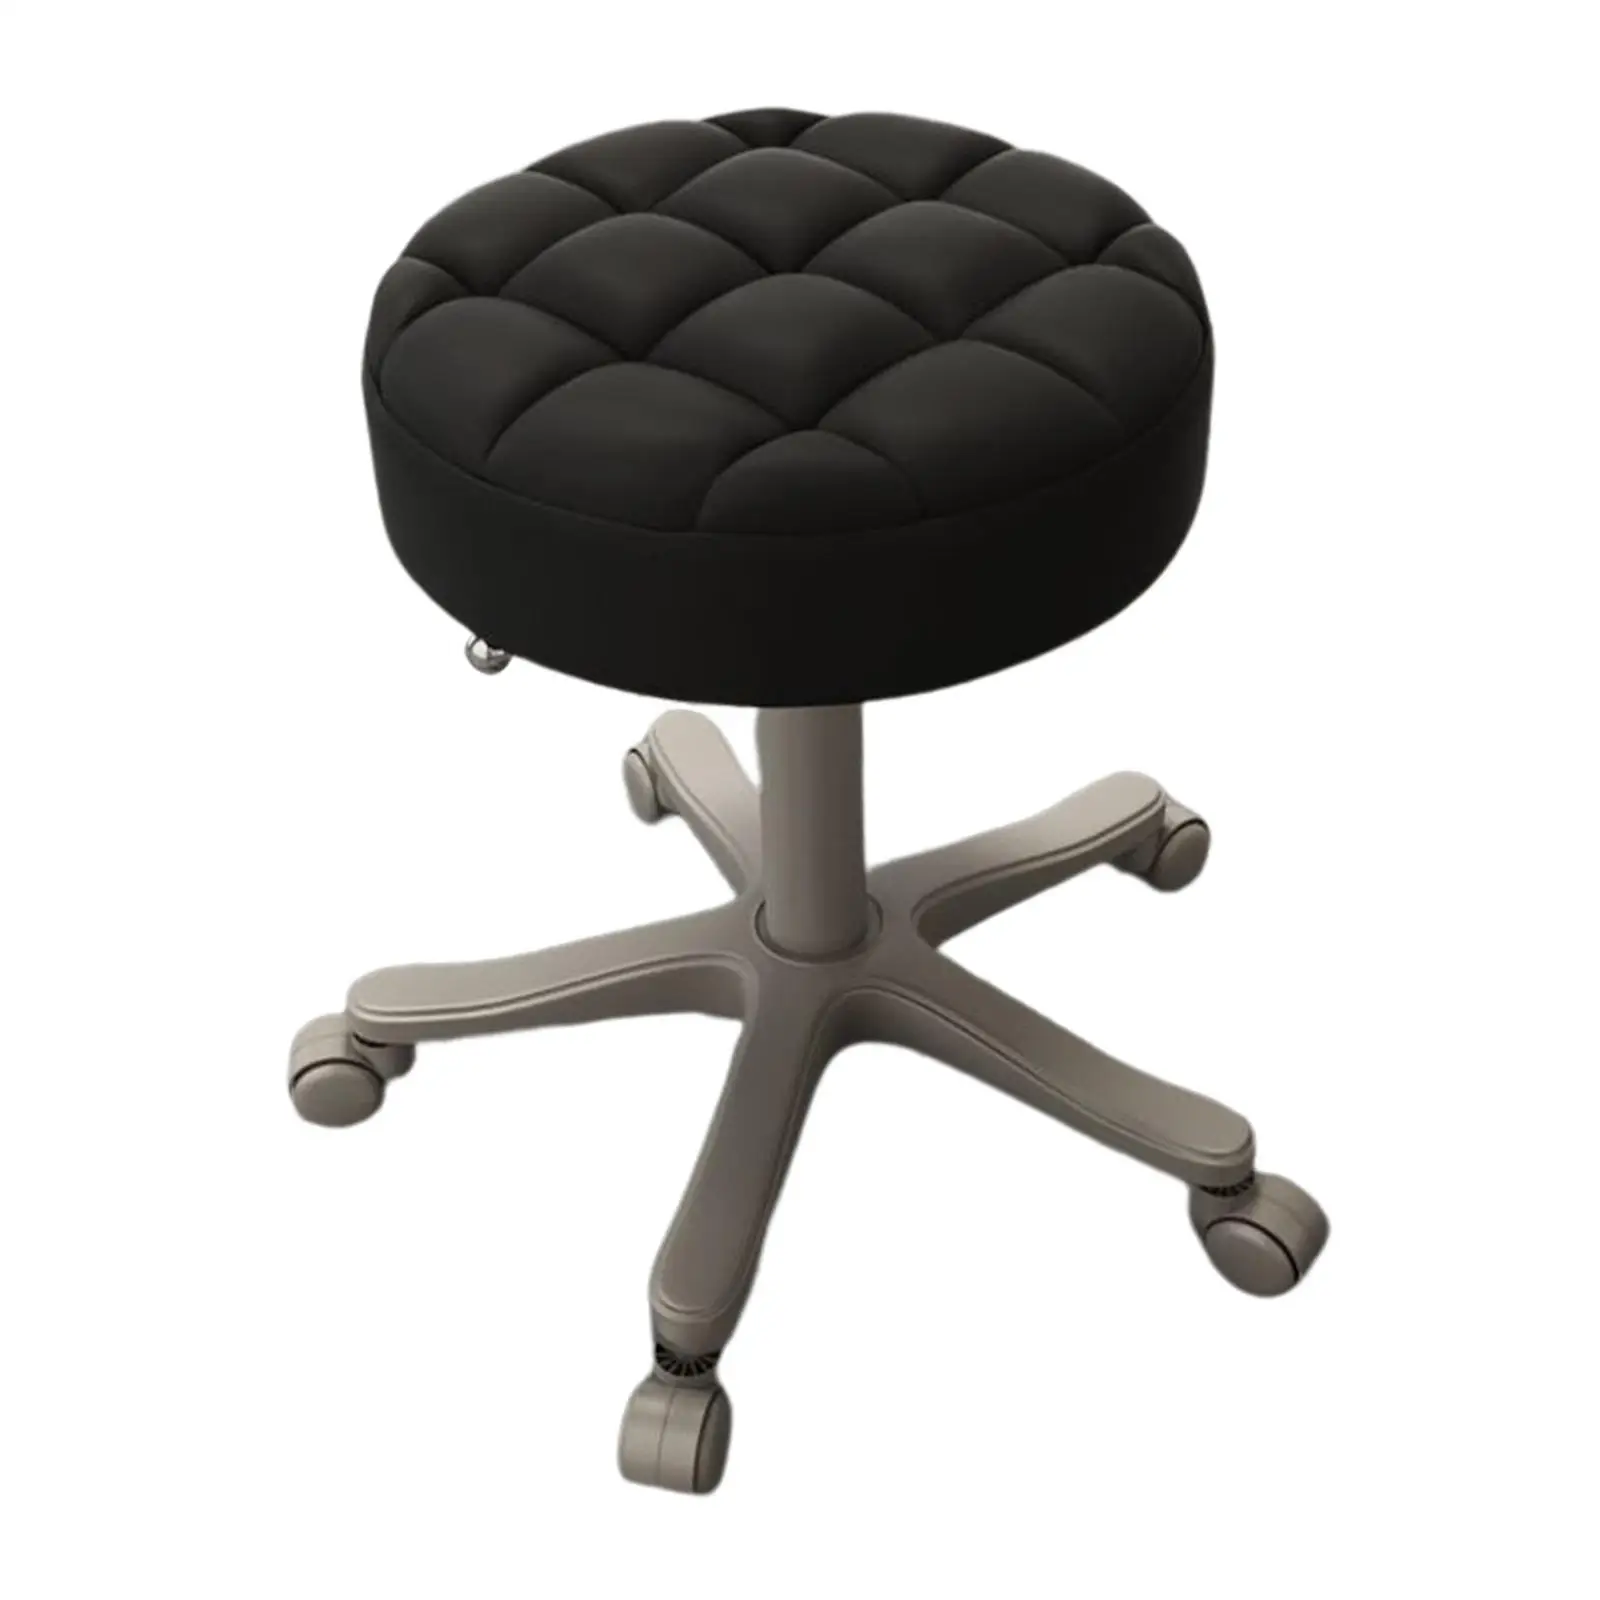 Swivel Salon Stool Heavy Duty Lash Chair 35~45cm Adjust Multipurpose Drafting Bar Stool with Wheels for Barbershop, Housework